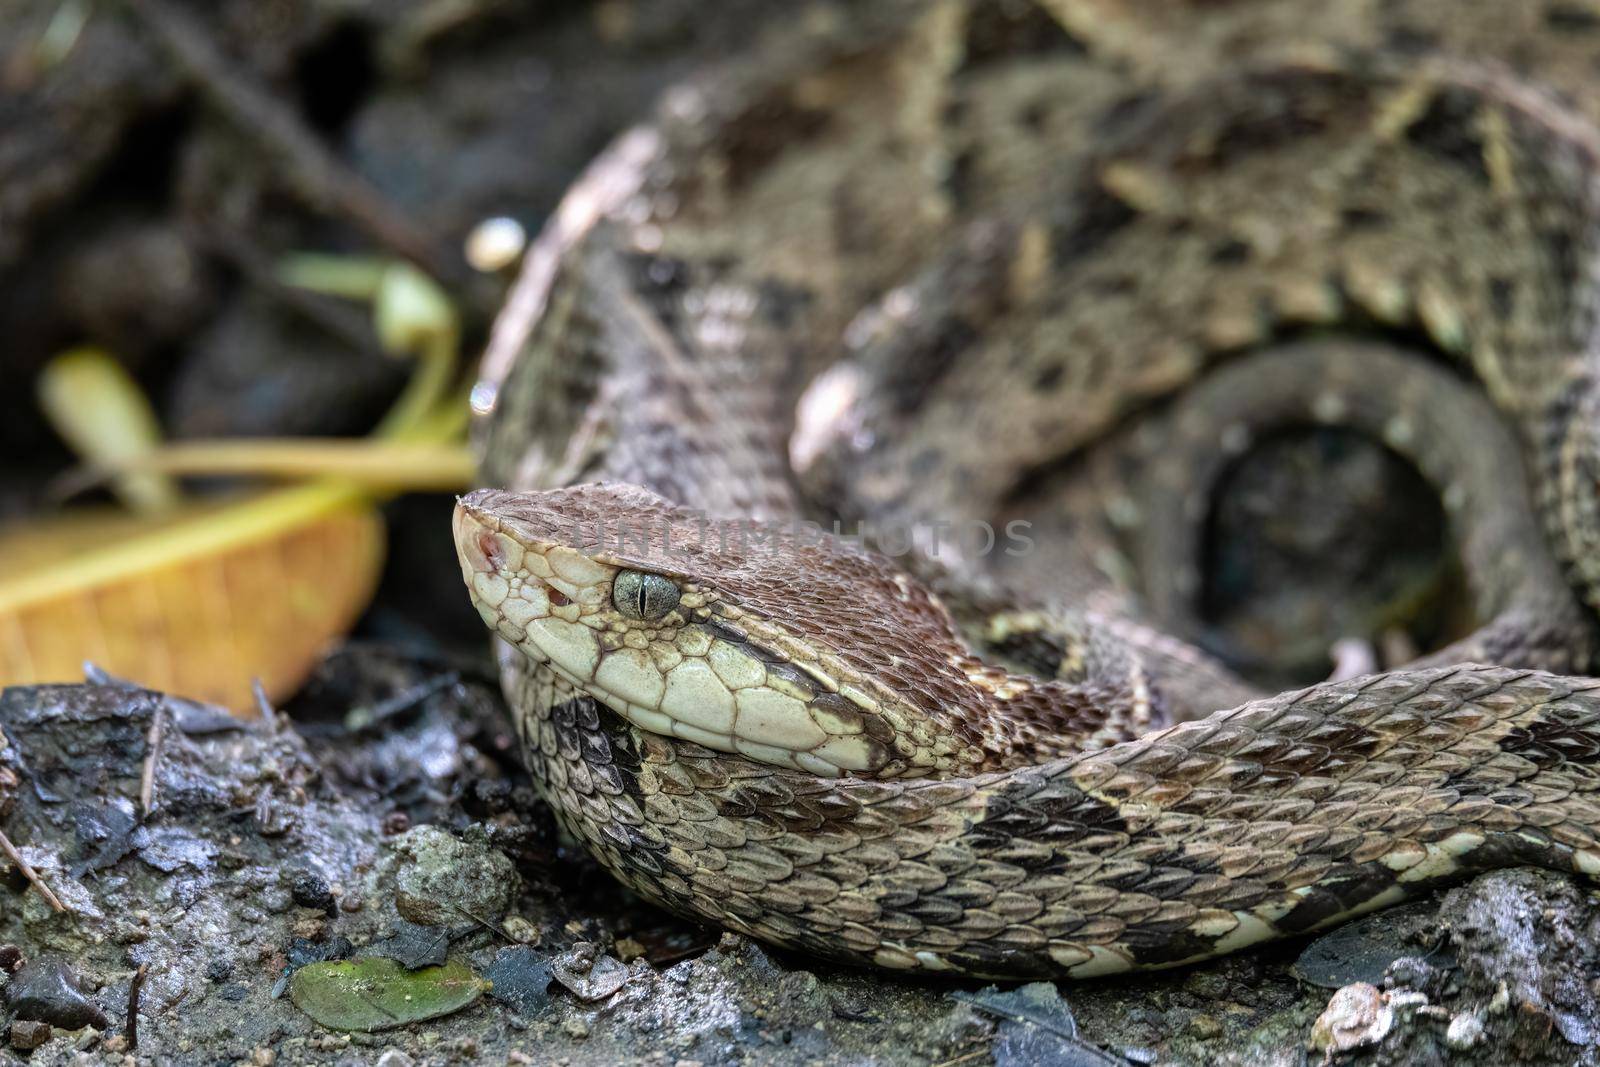 Danger and deadly venomous snake Terciopelo (Bothrops asper), resting near tourist path in National Park Carara, Costa Rica wildlife.